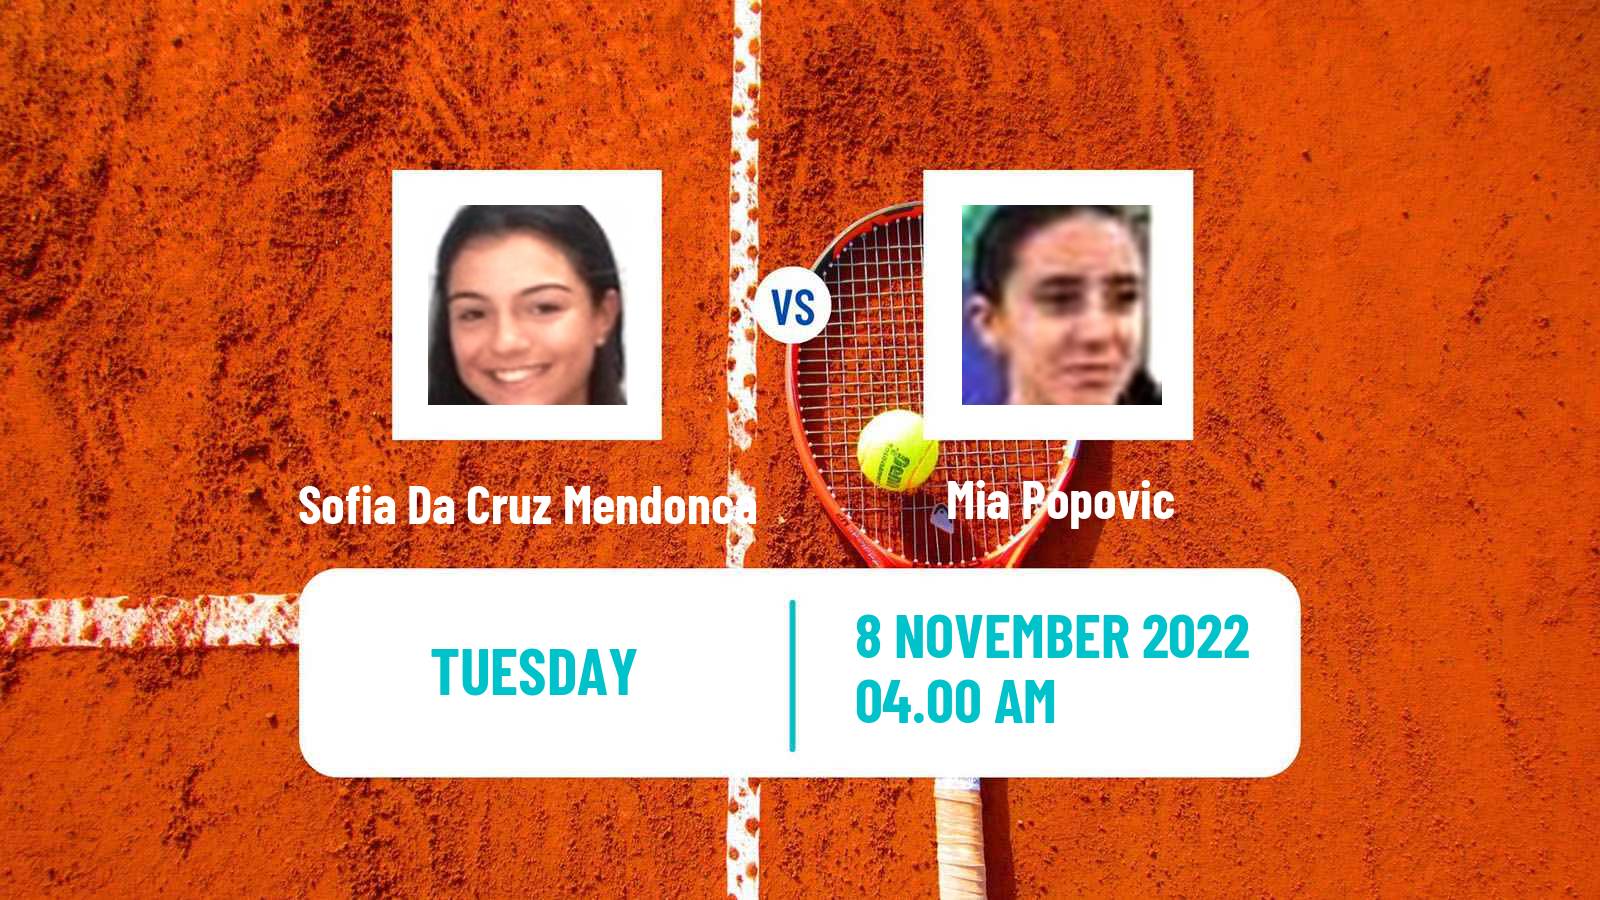 Tennis ITF Tournaments Sofia Da Cruz Mendonca - Mia Popovic